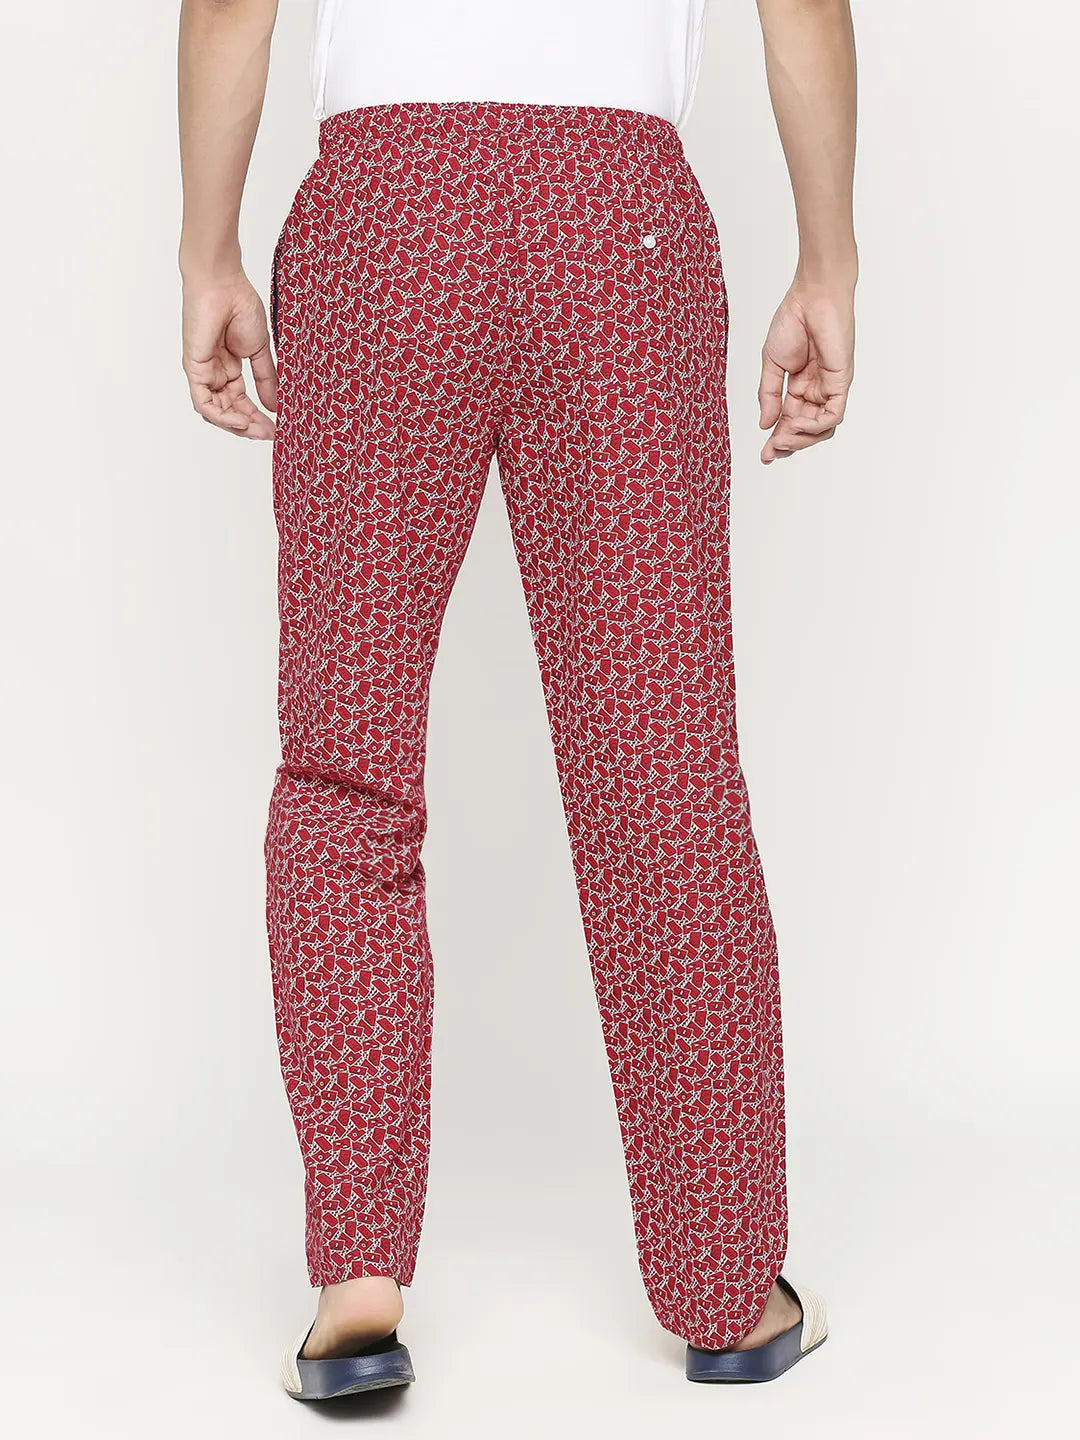 Men Premium Red & White Cotton Regular Fit Pyjama - UnderJeans by Spykar